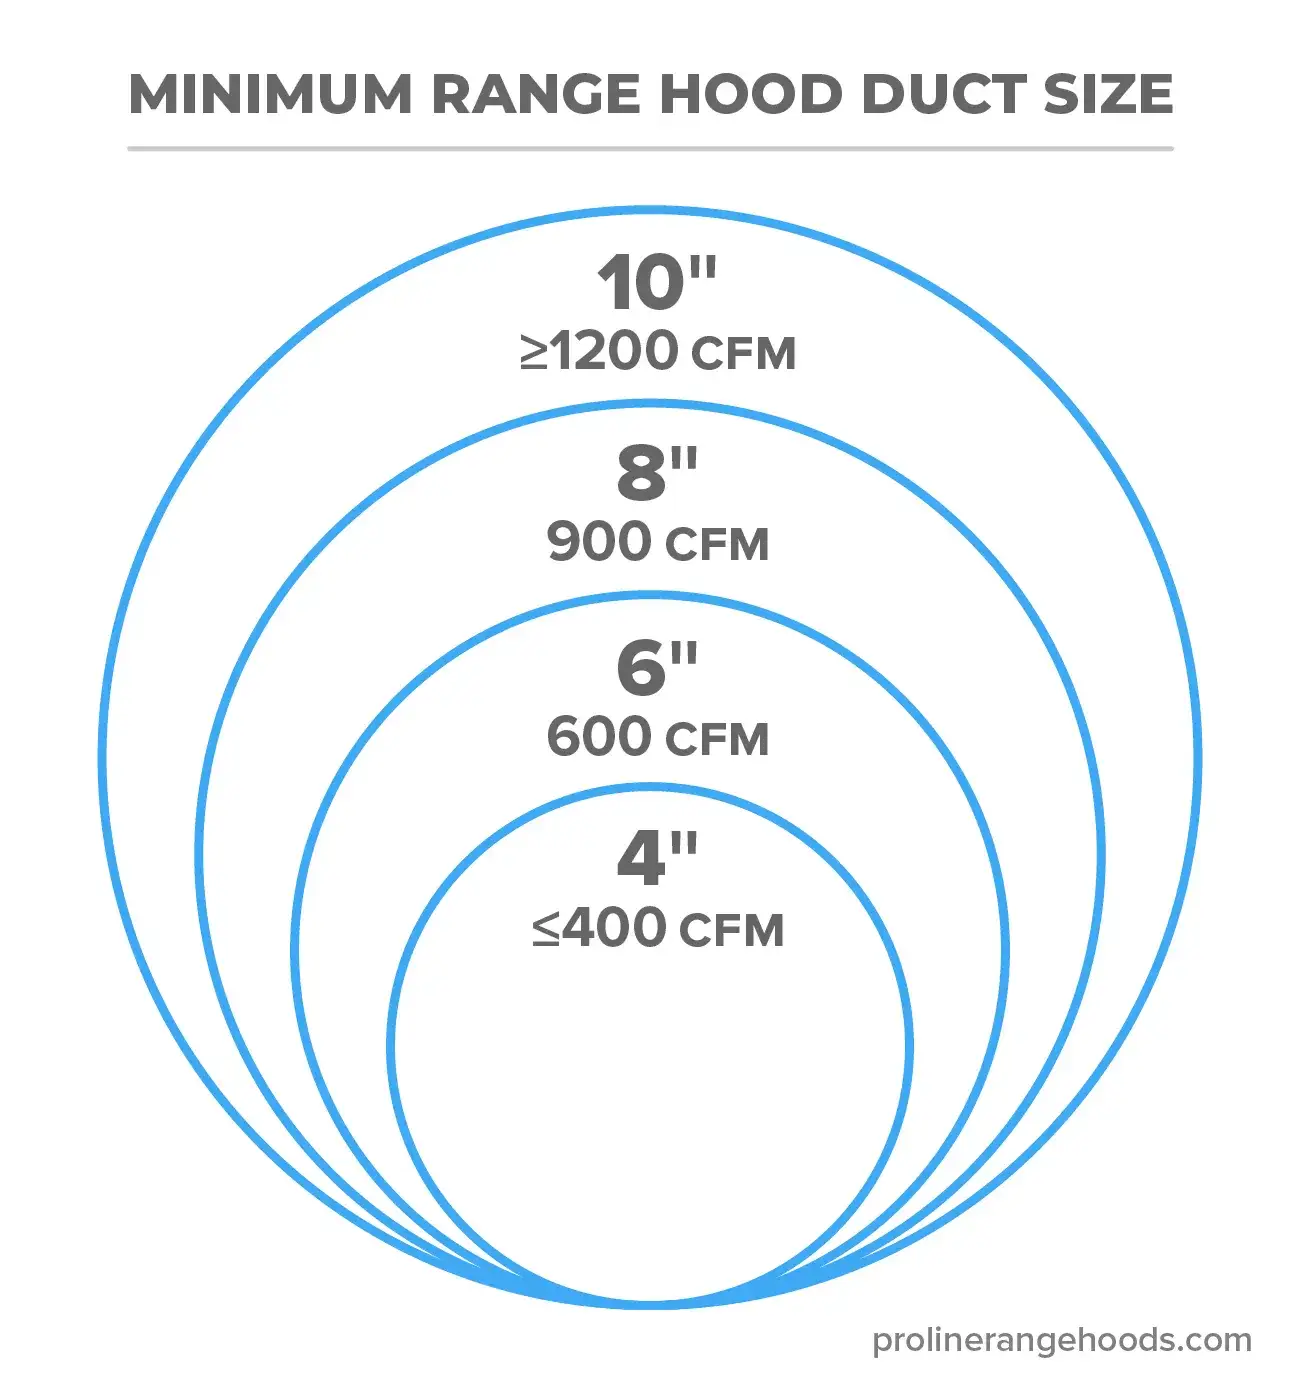 proline range hoods minimum duct diameter size for outdoor range hoods - prolinerangehoods.com